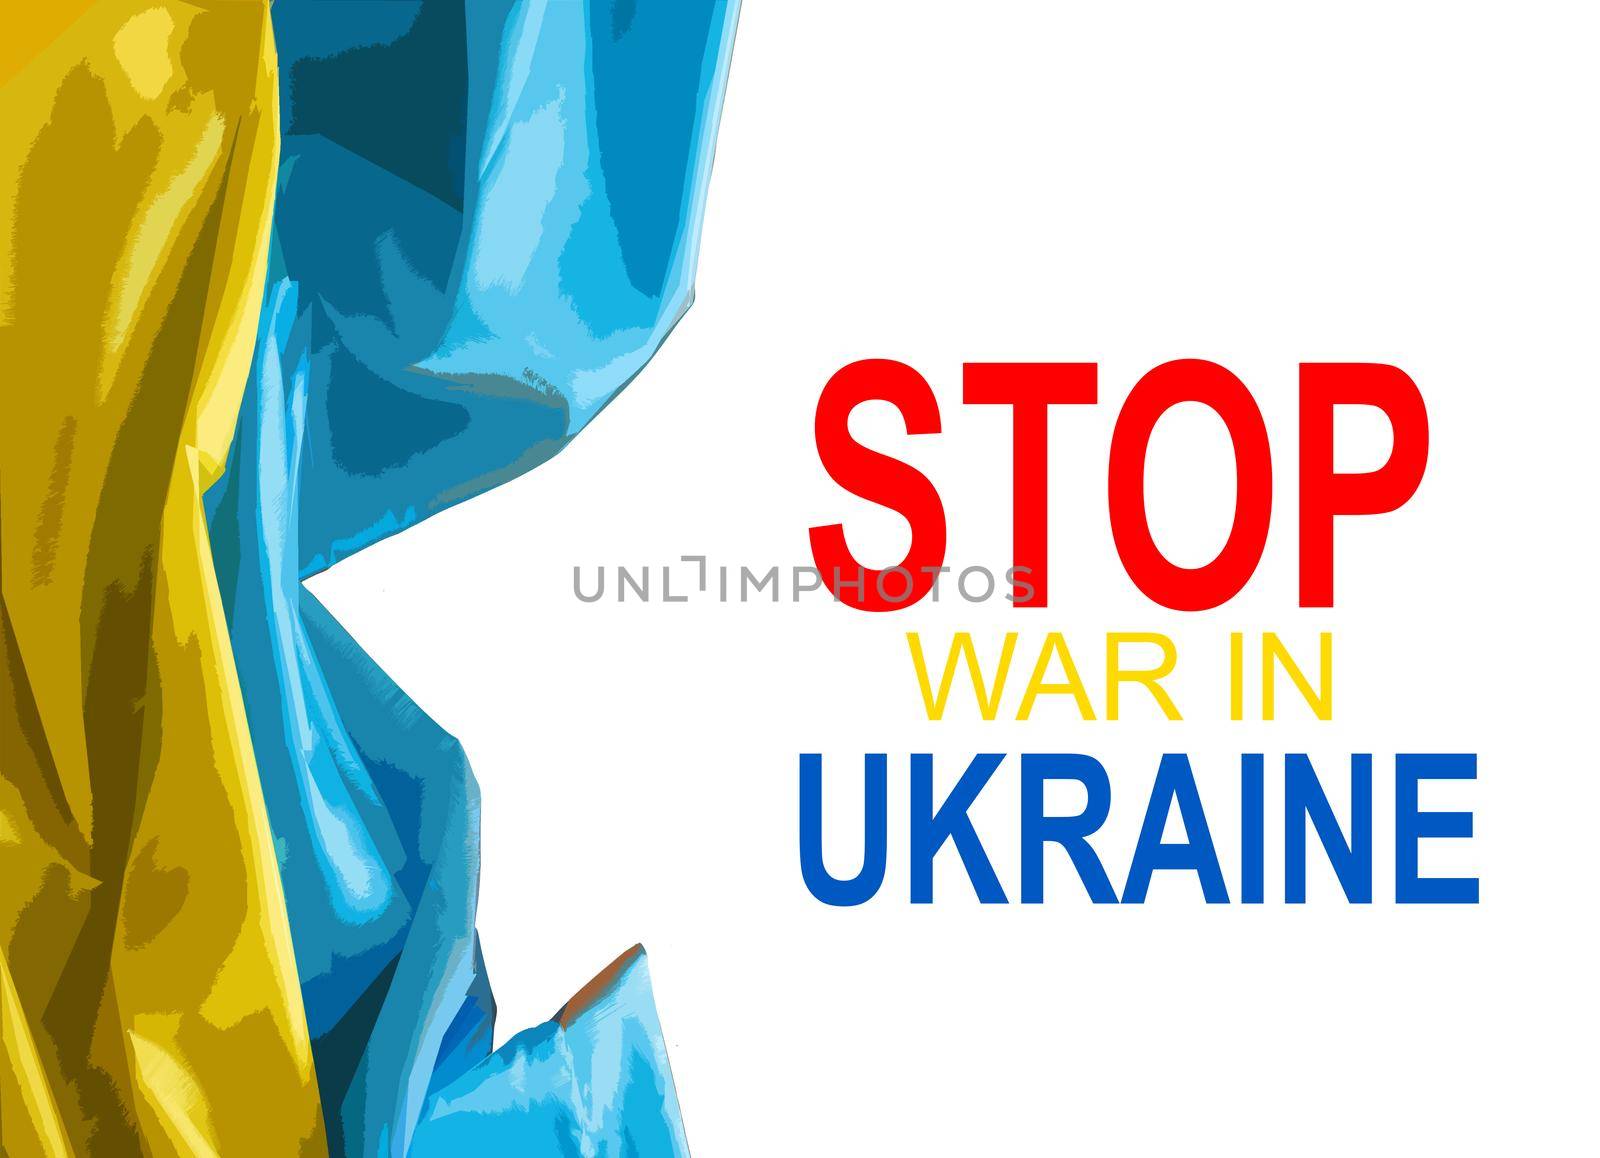 stop war in Ukraine banner illustration